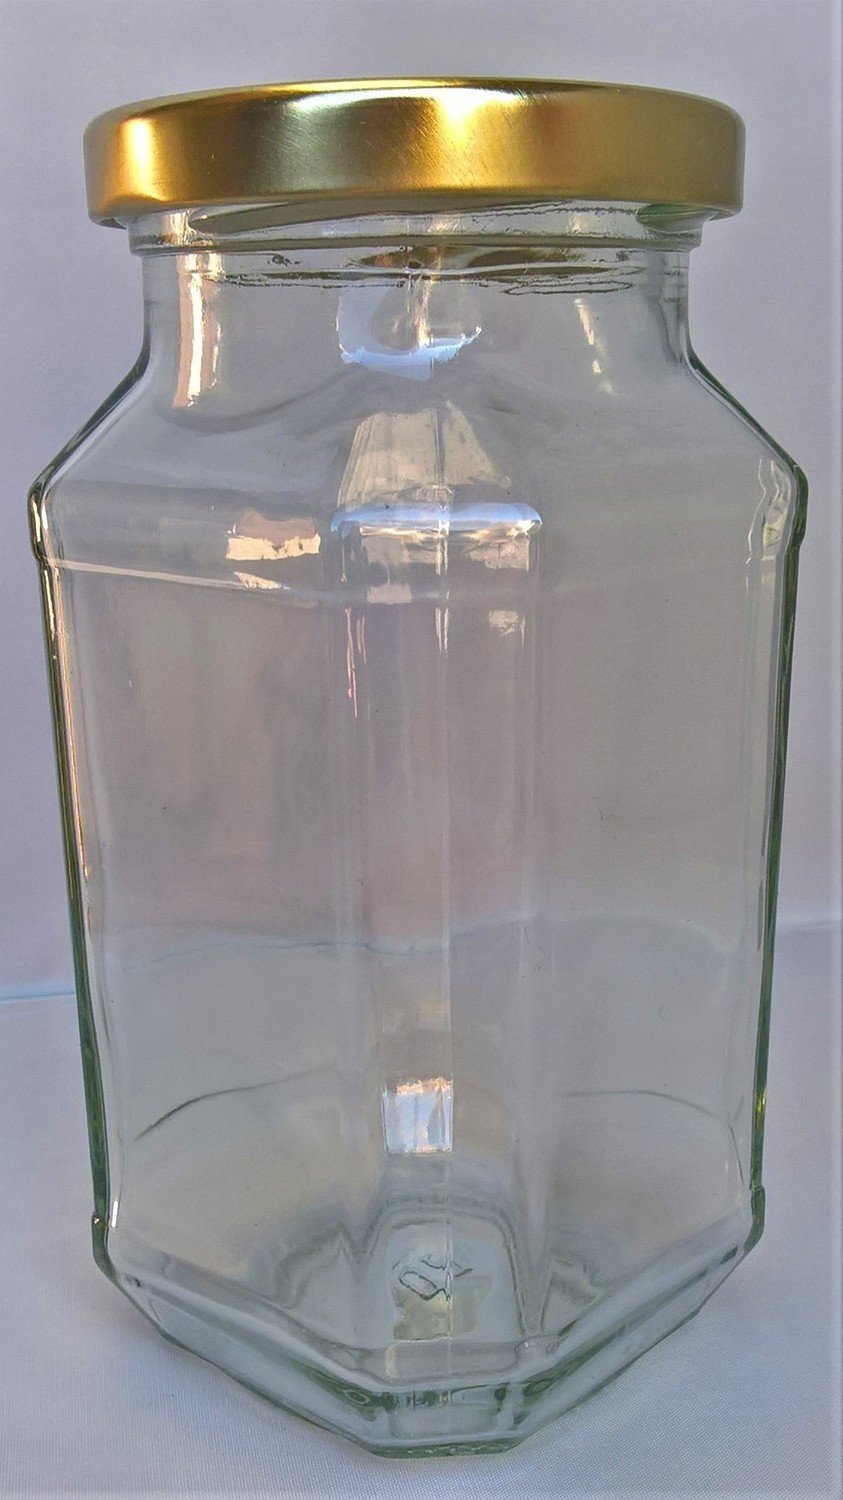 Quadro glass jam jar - 440ml